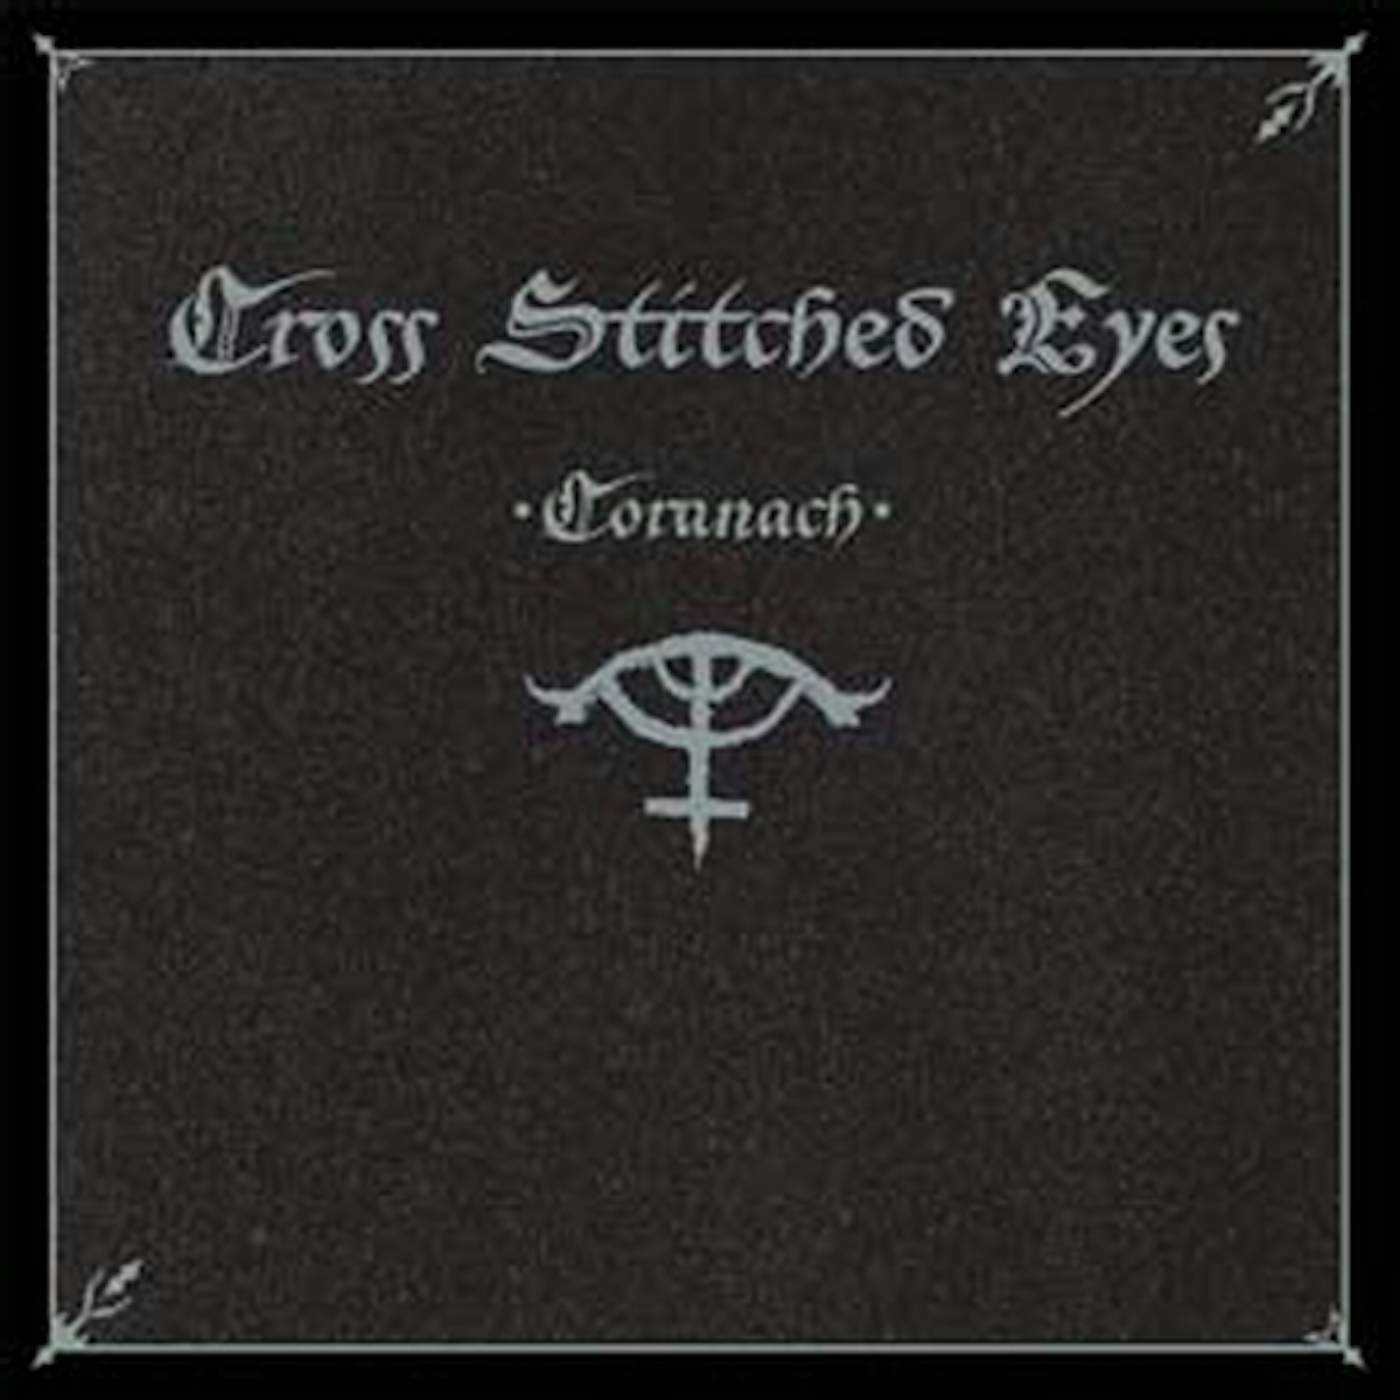 Cross Stitched Eyes Coranach Vinyl Record